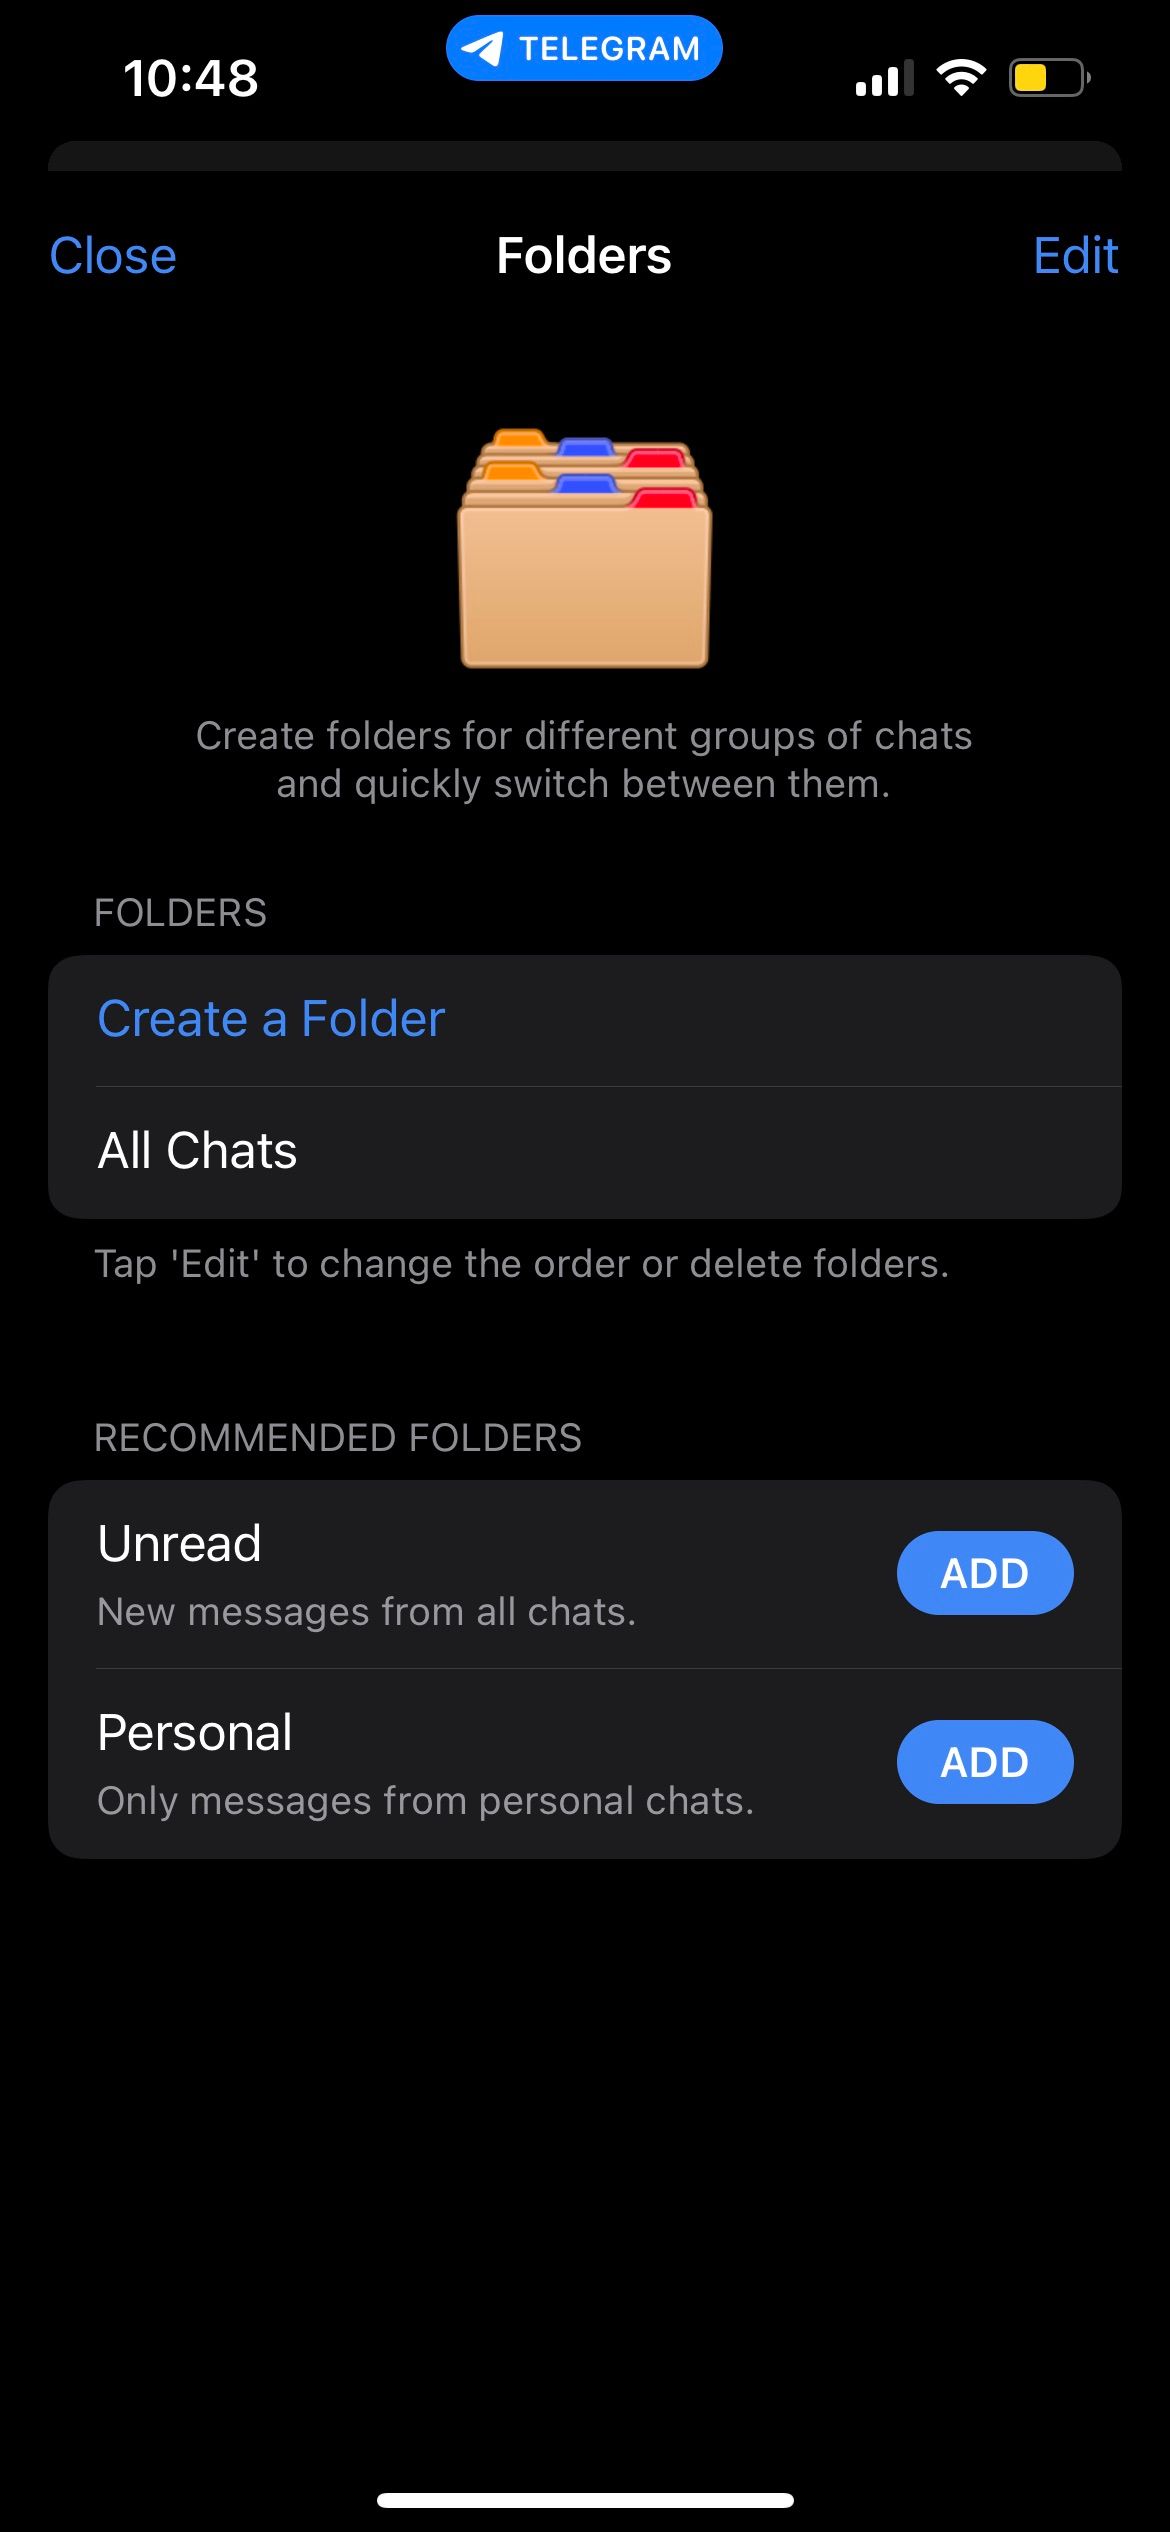 Folders creation page on Telegram